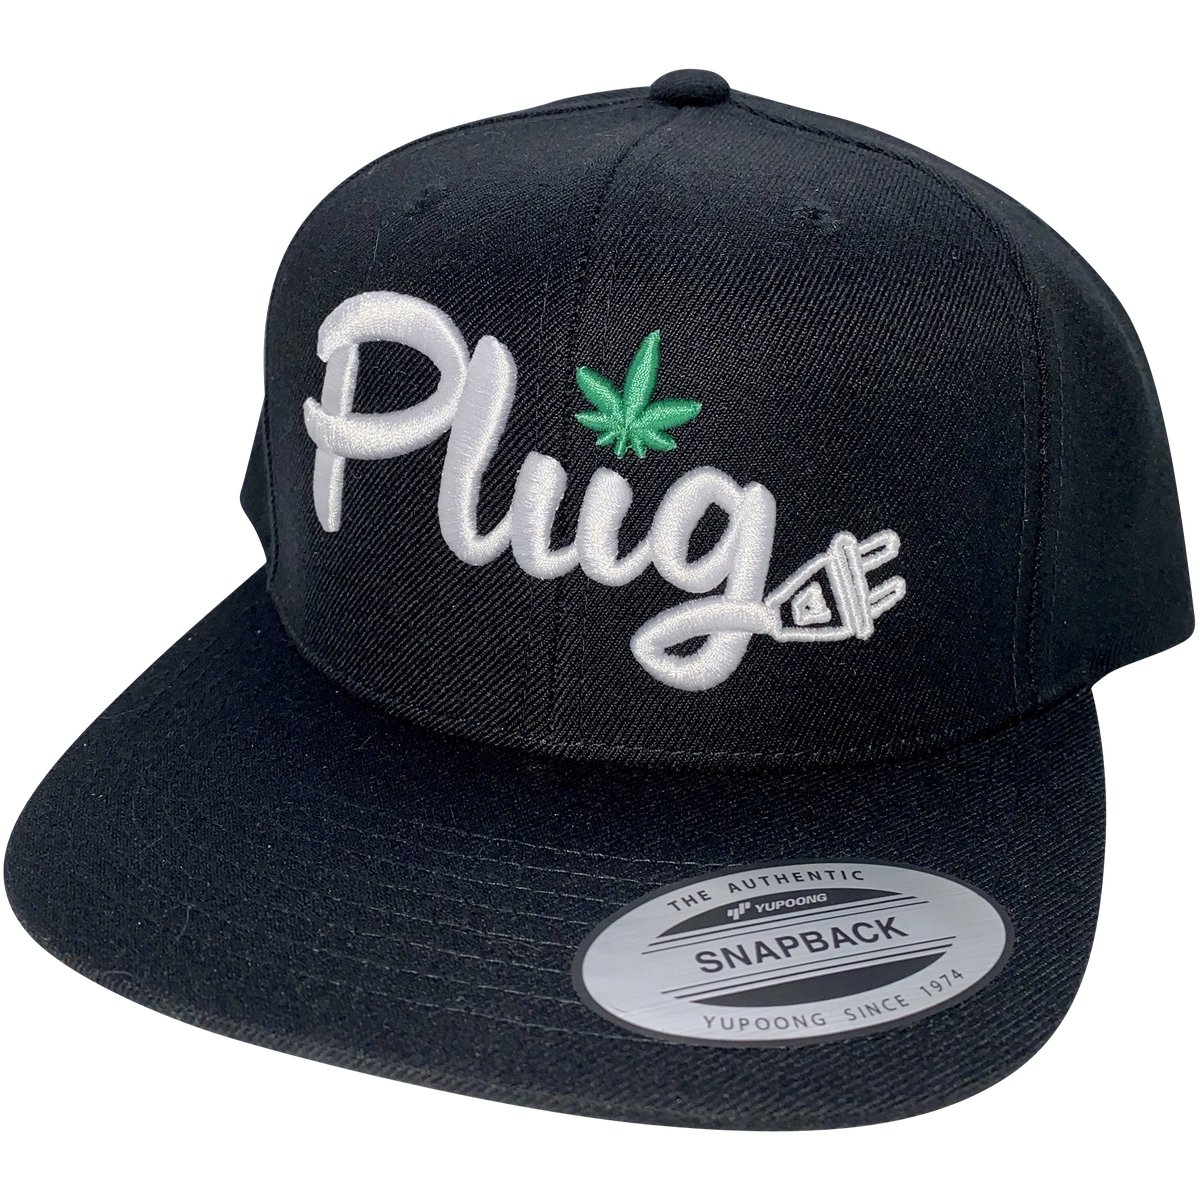 The Plug Hat